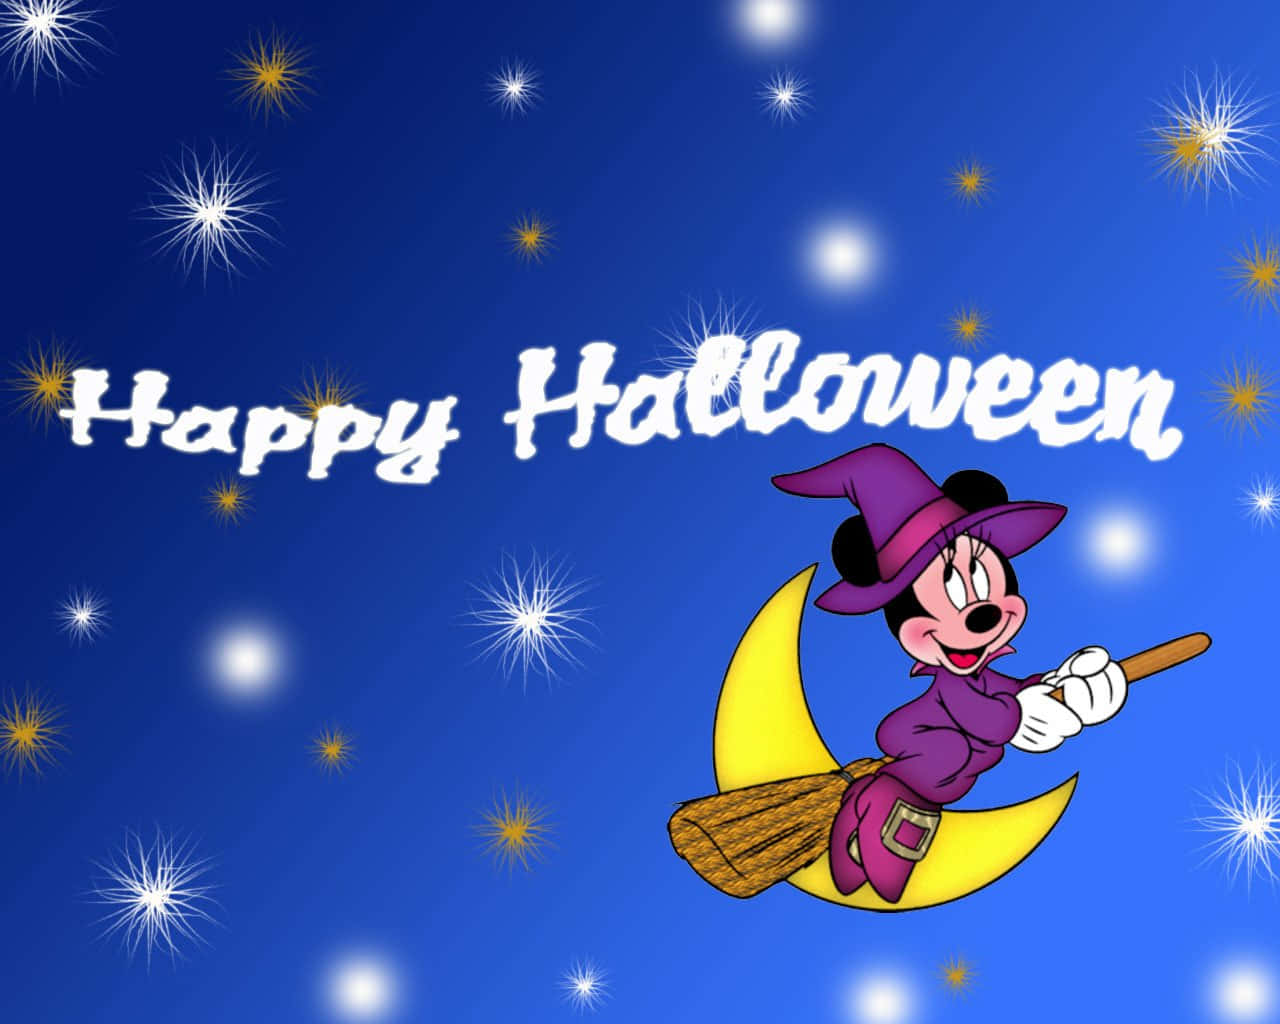 Spooky Disney Halloween Night